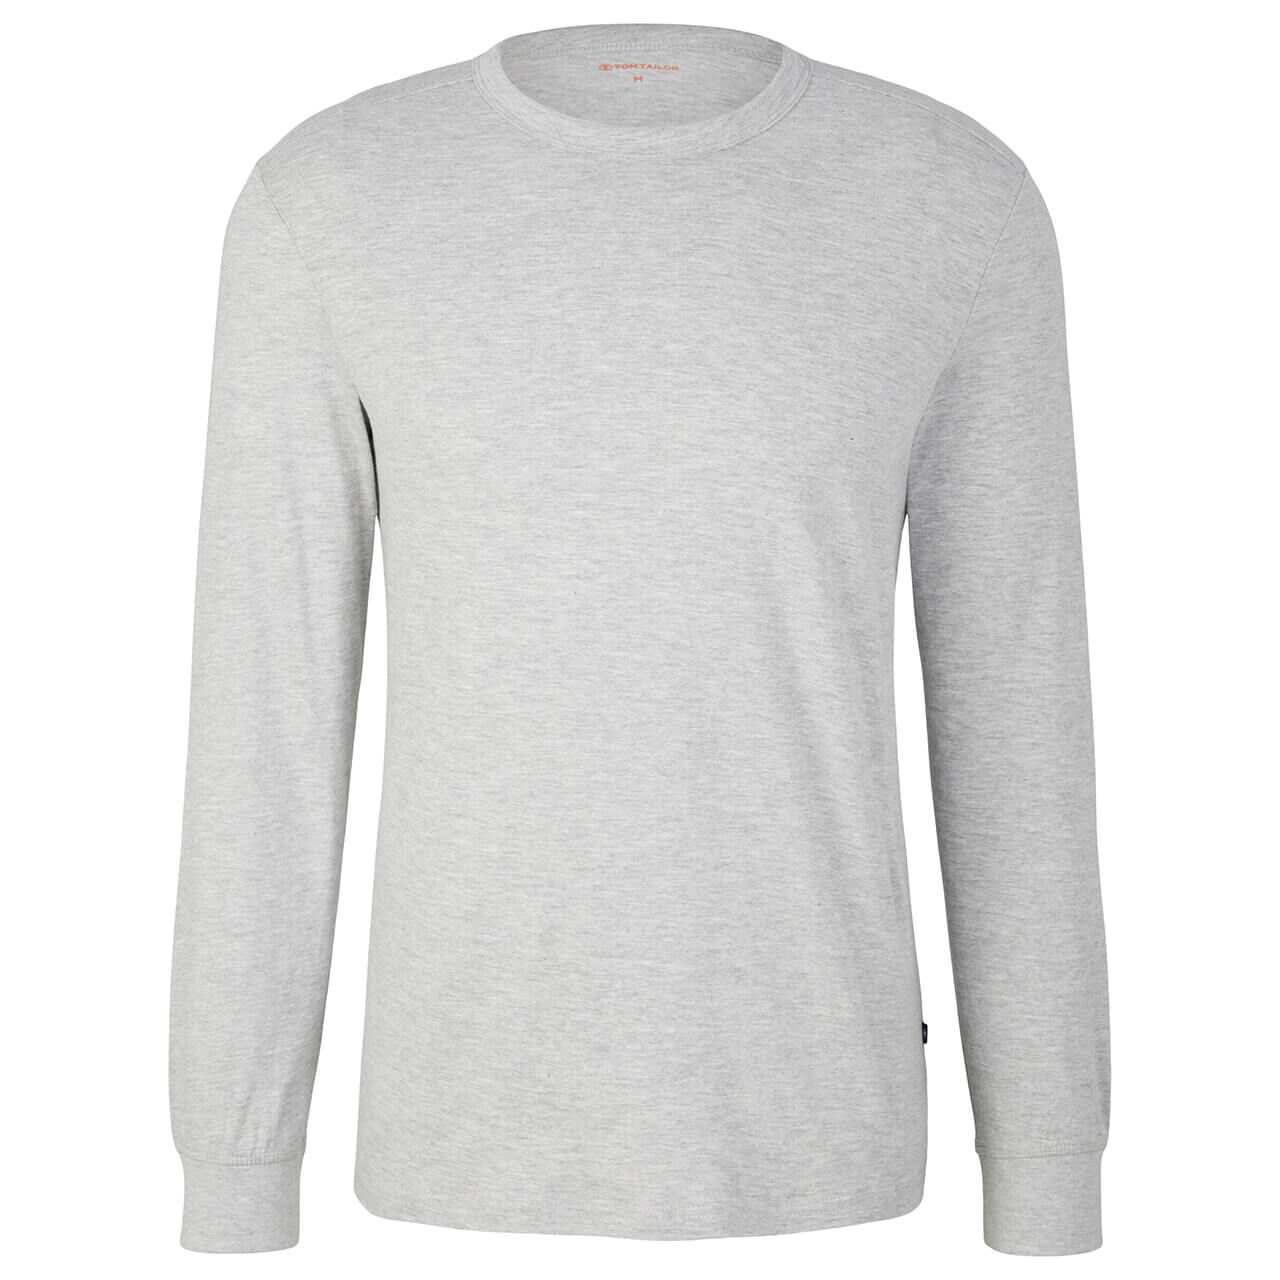 Tom Tailor Herren Langarm Shirt ordinary grey melange